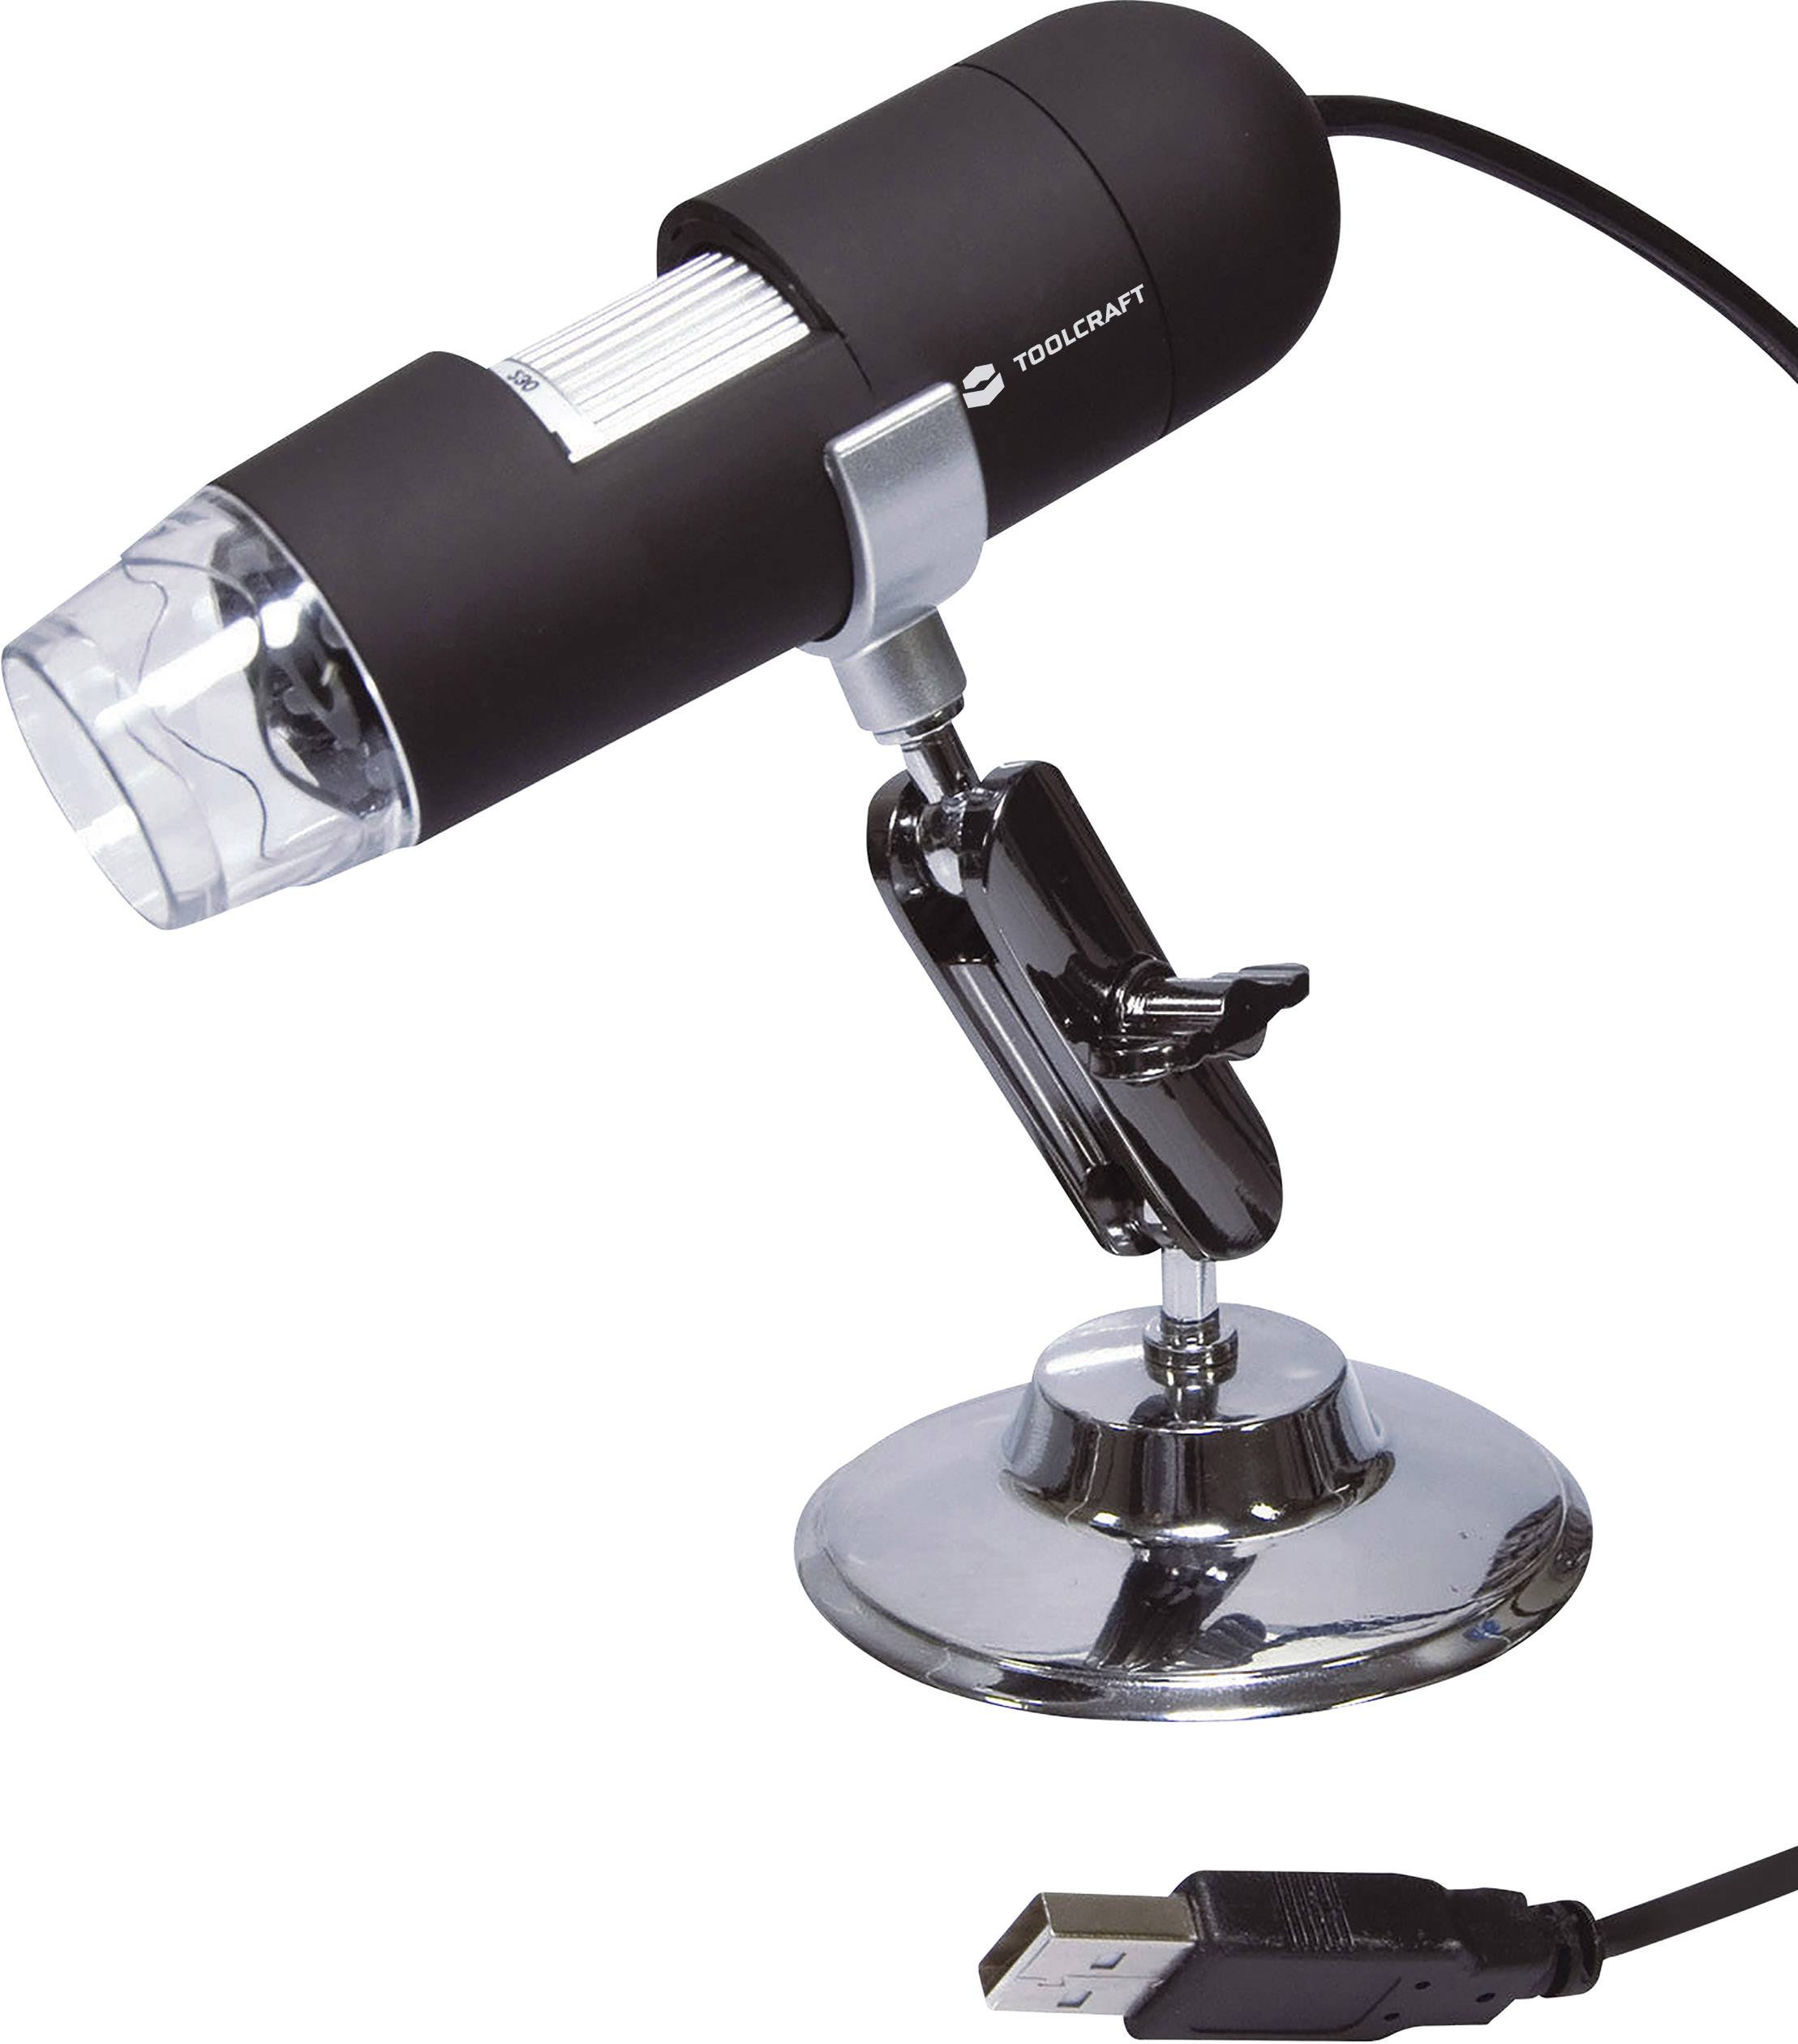 Microscope USB TOOLCRAFT 2 Mill. pixel Grossissement numérique